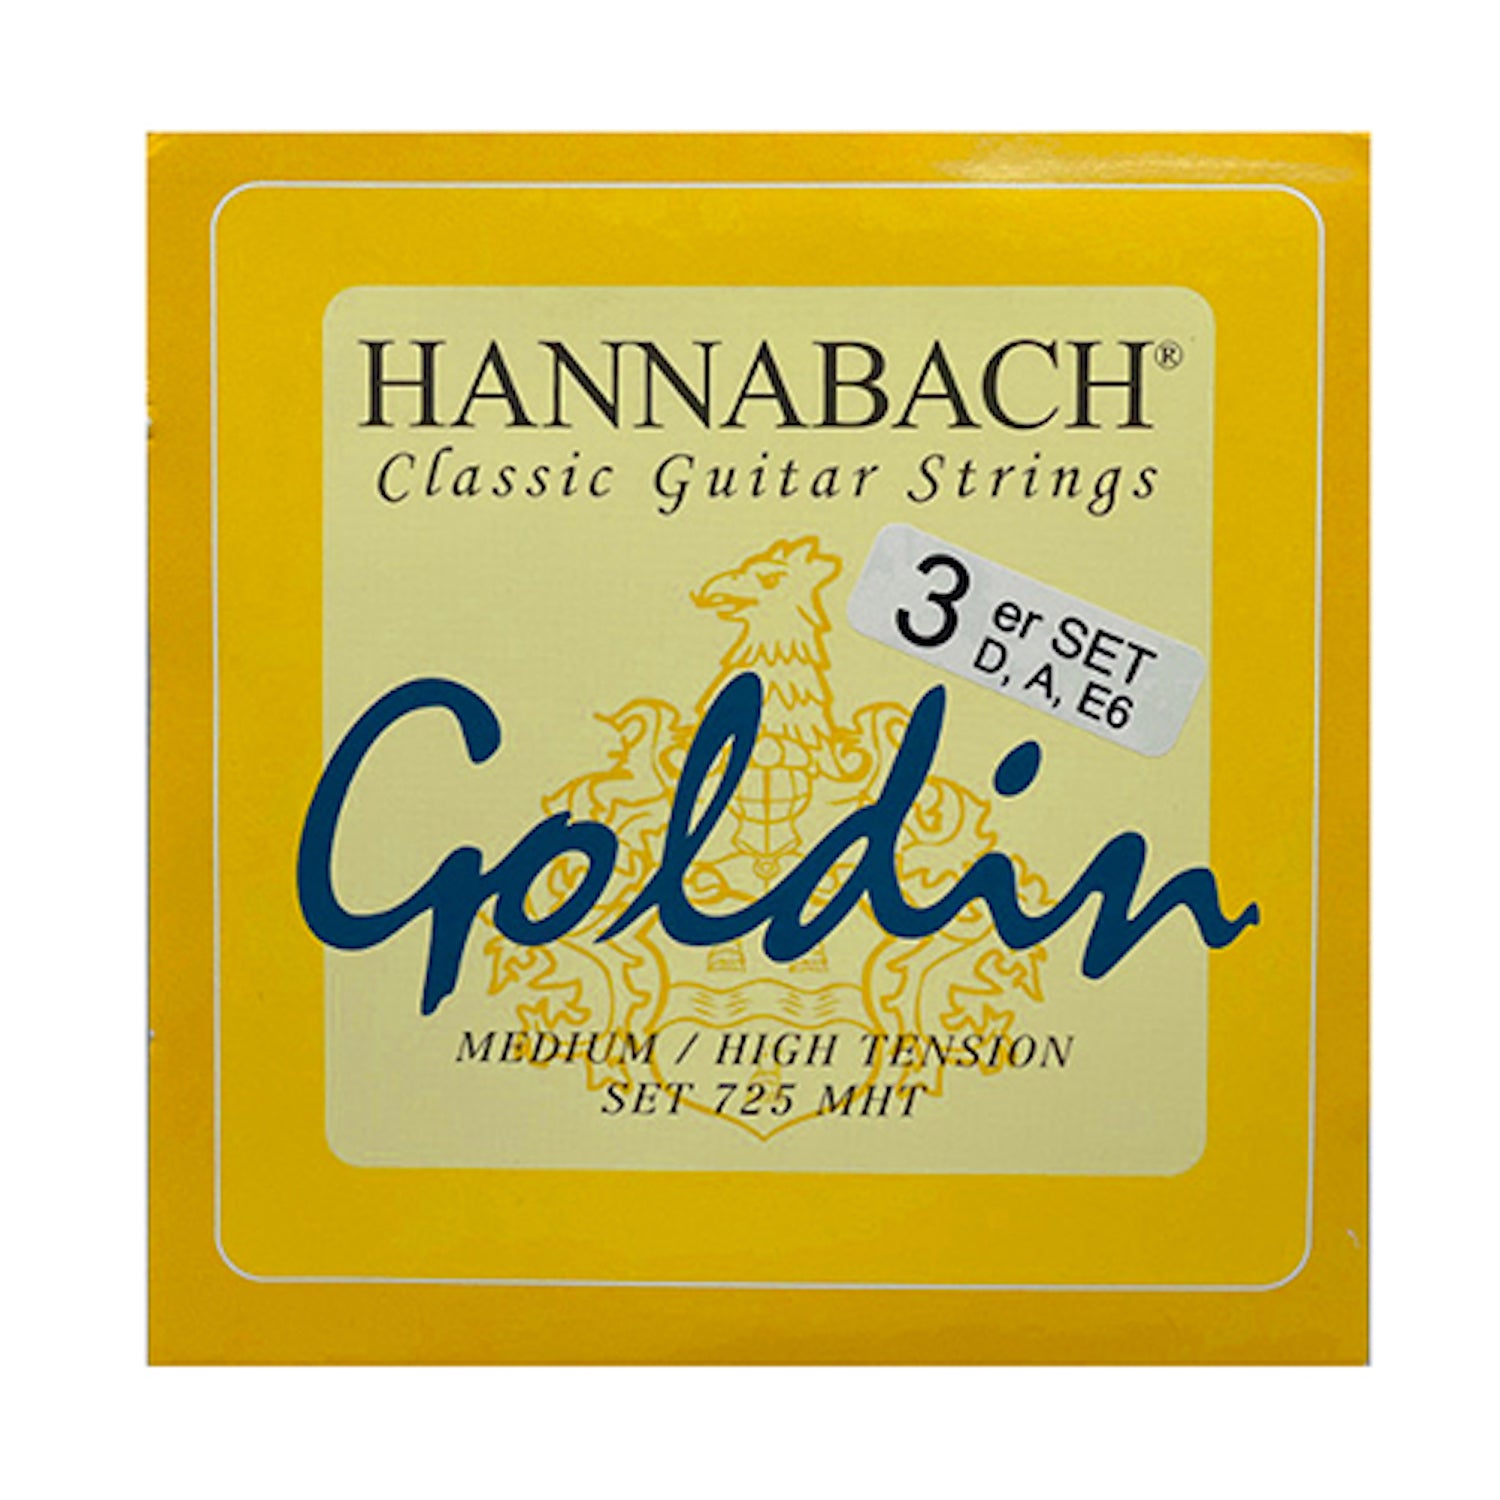 Hannabach Goldin Basses Only (EAD) Medium/High Tension